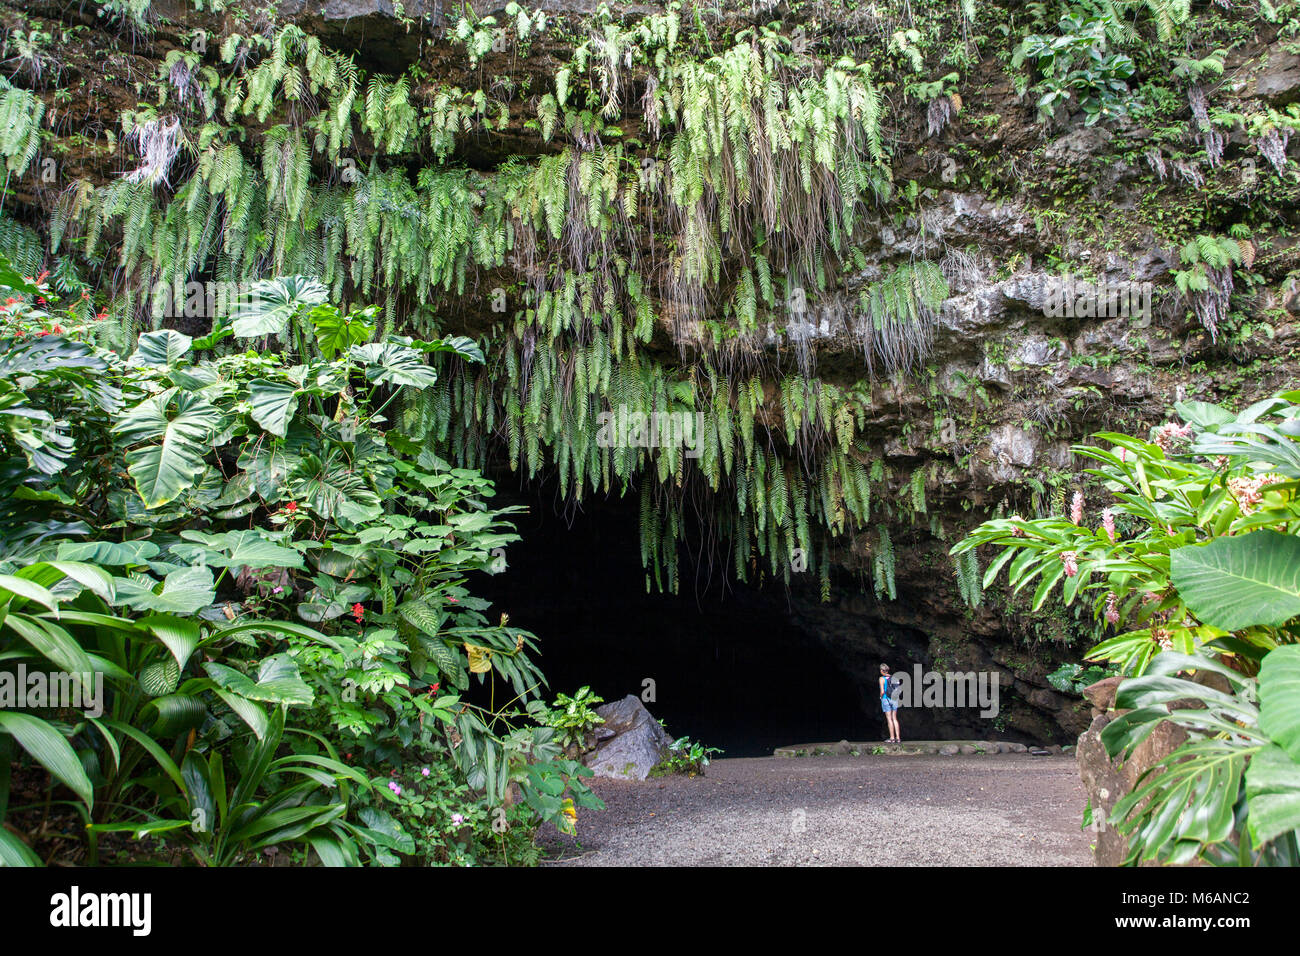 Woman standing in front of Maraa Grotto, Grotto, Cave, Fern, Taravao, Tahiti, French Polynesia Stock Photo